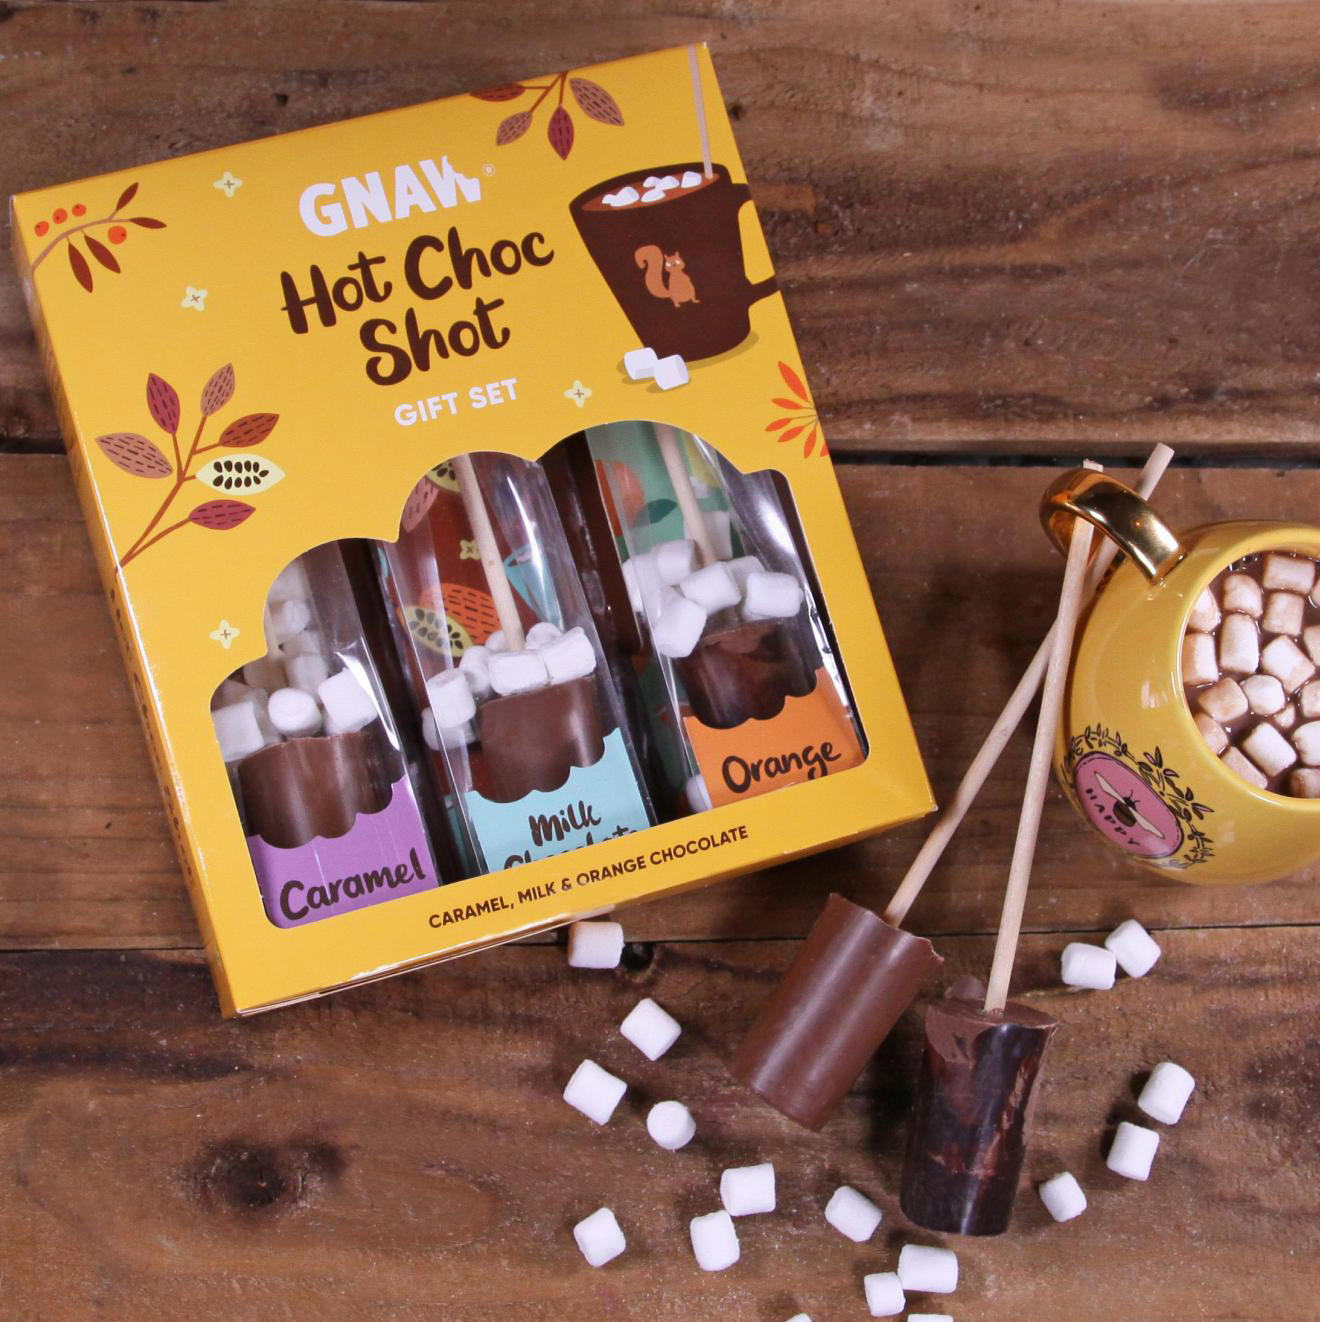 Gnaw Hot Choc Shot chokladdryck • Pryloteket